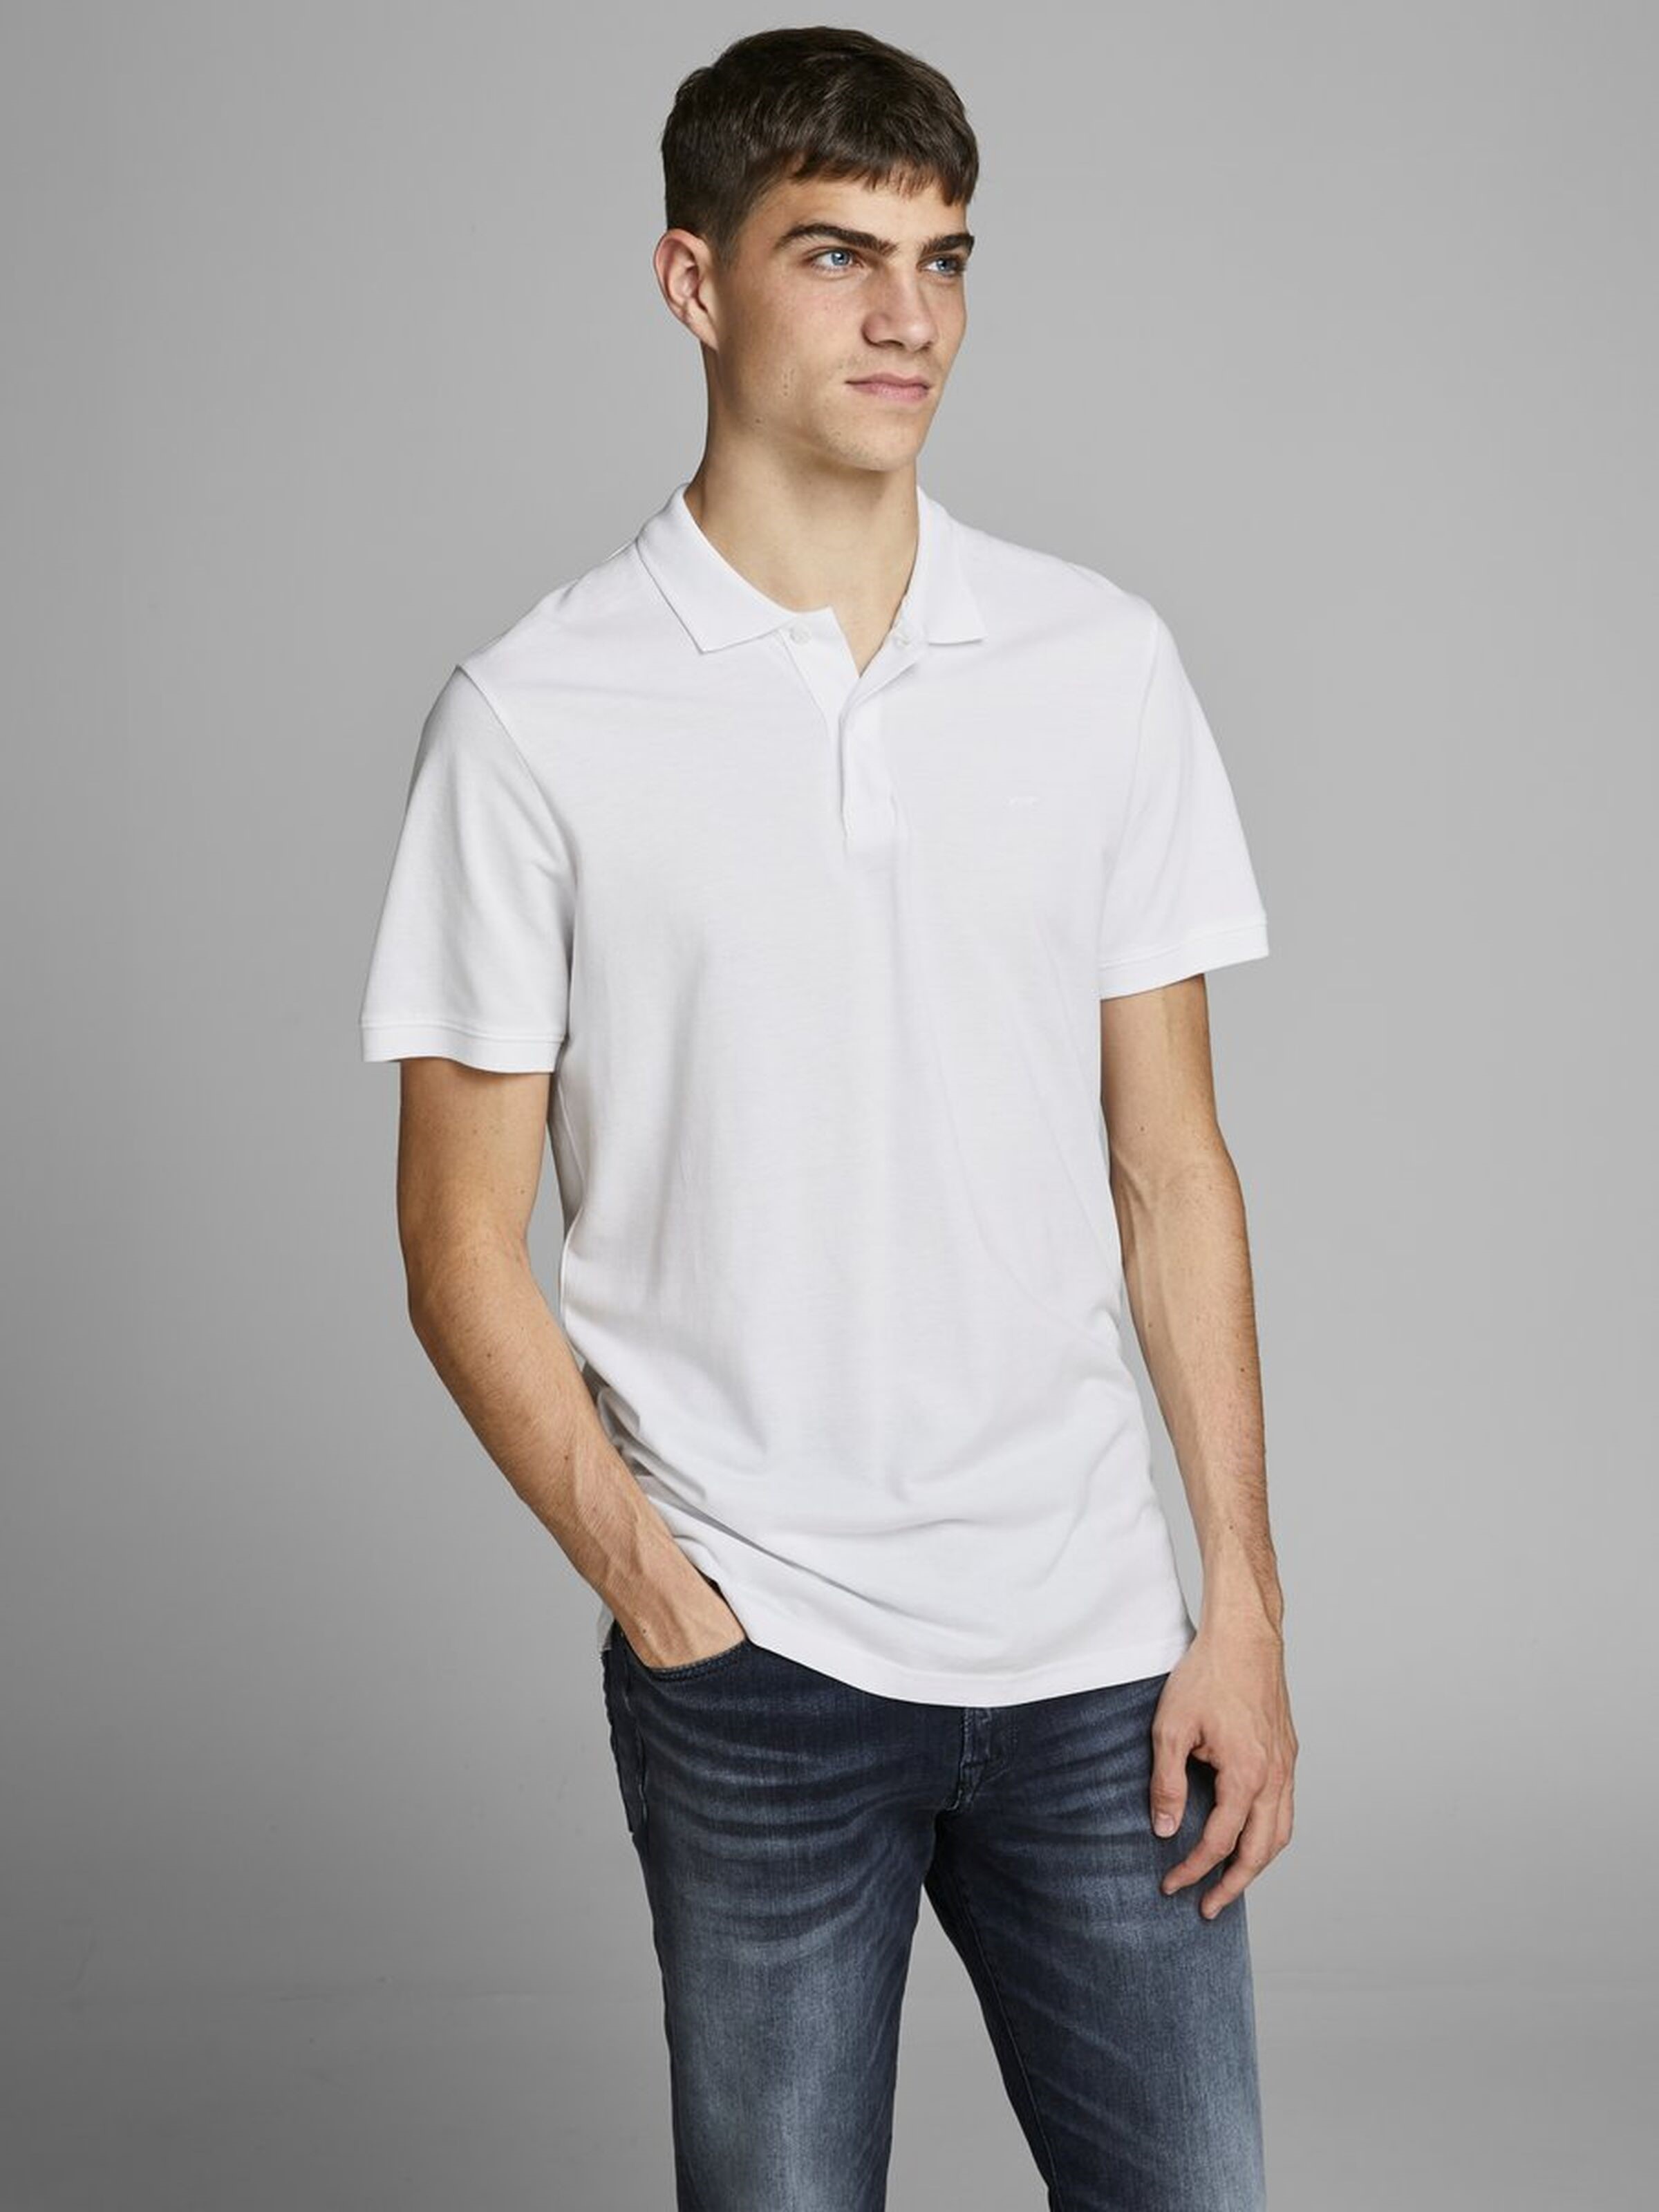 Jack Jones Erkek T-Shirt 12136516 White